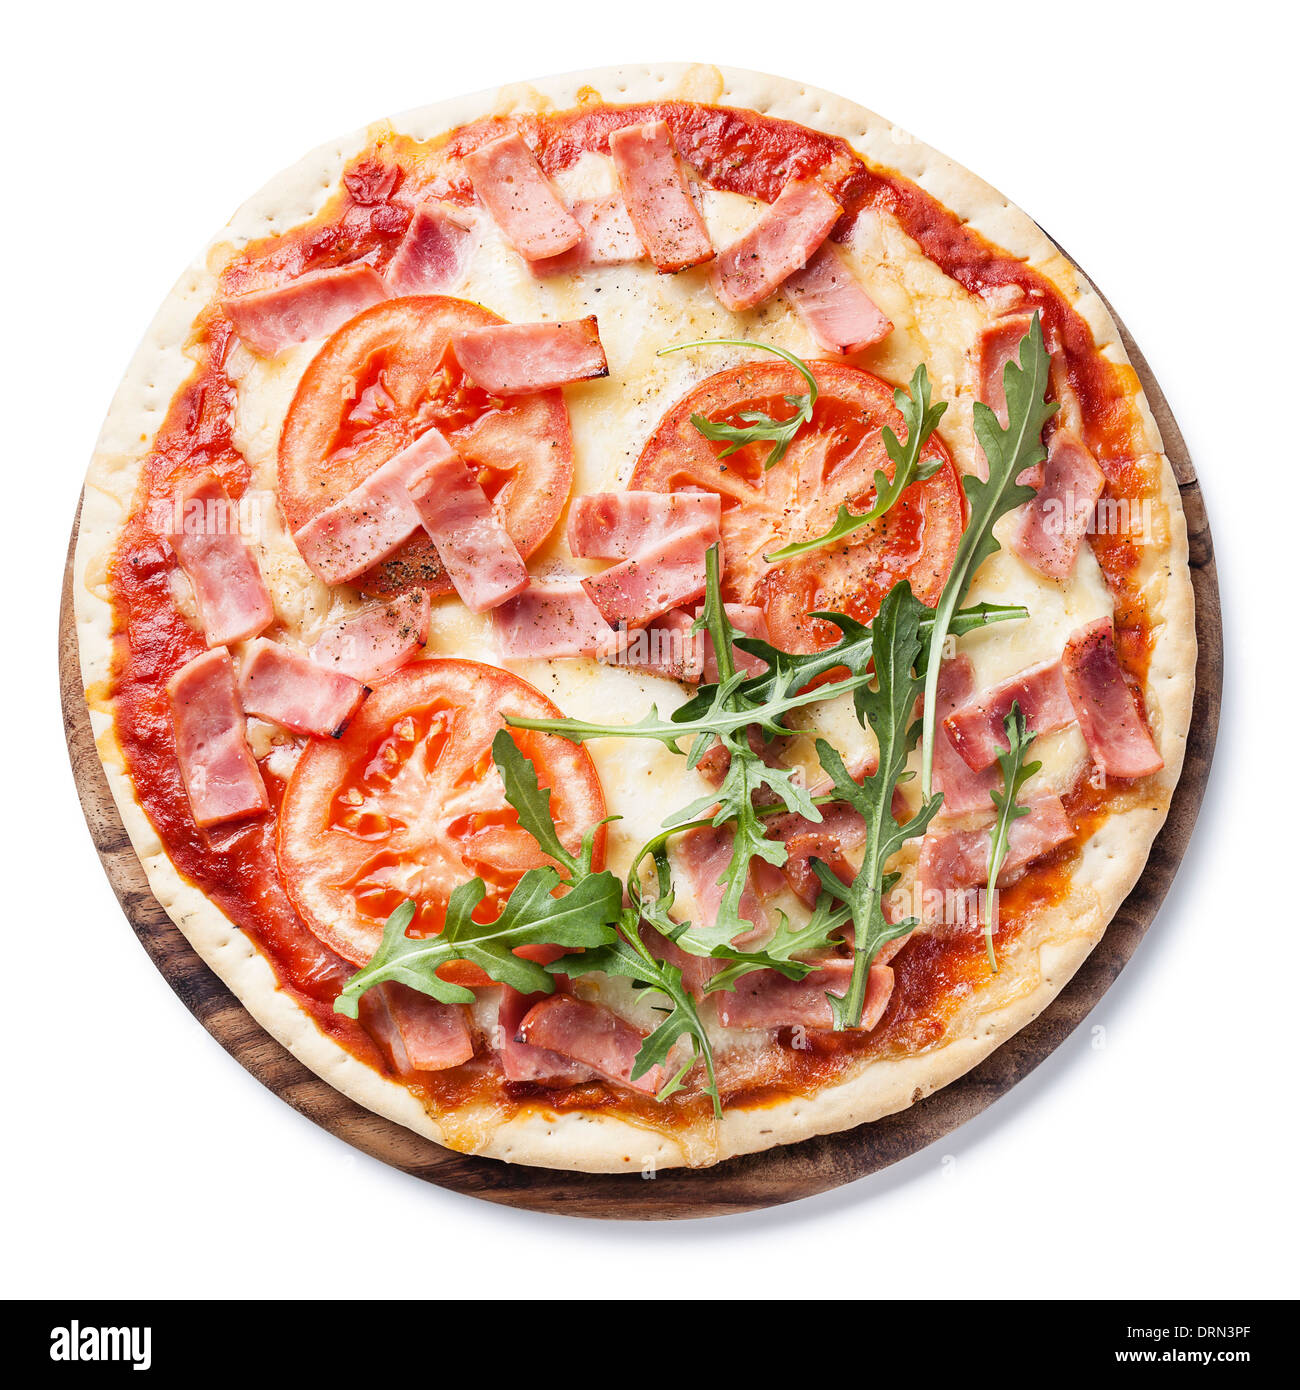 Italian pizza with ham and arugula leaves on white background Stock Photo